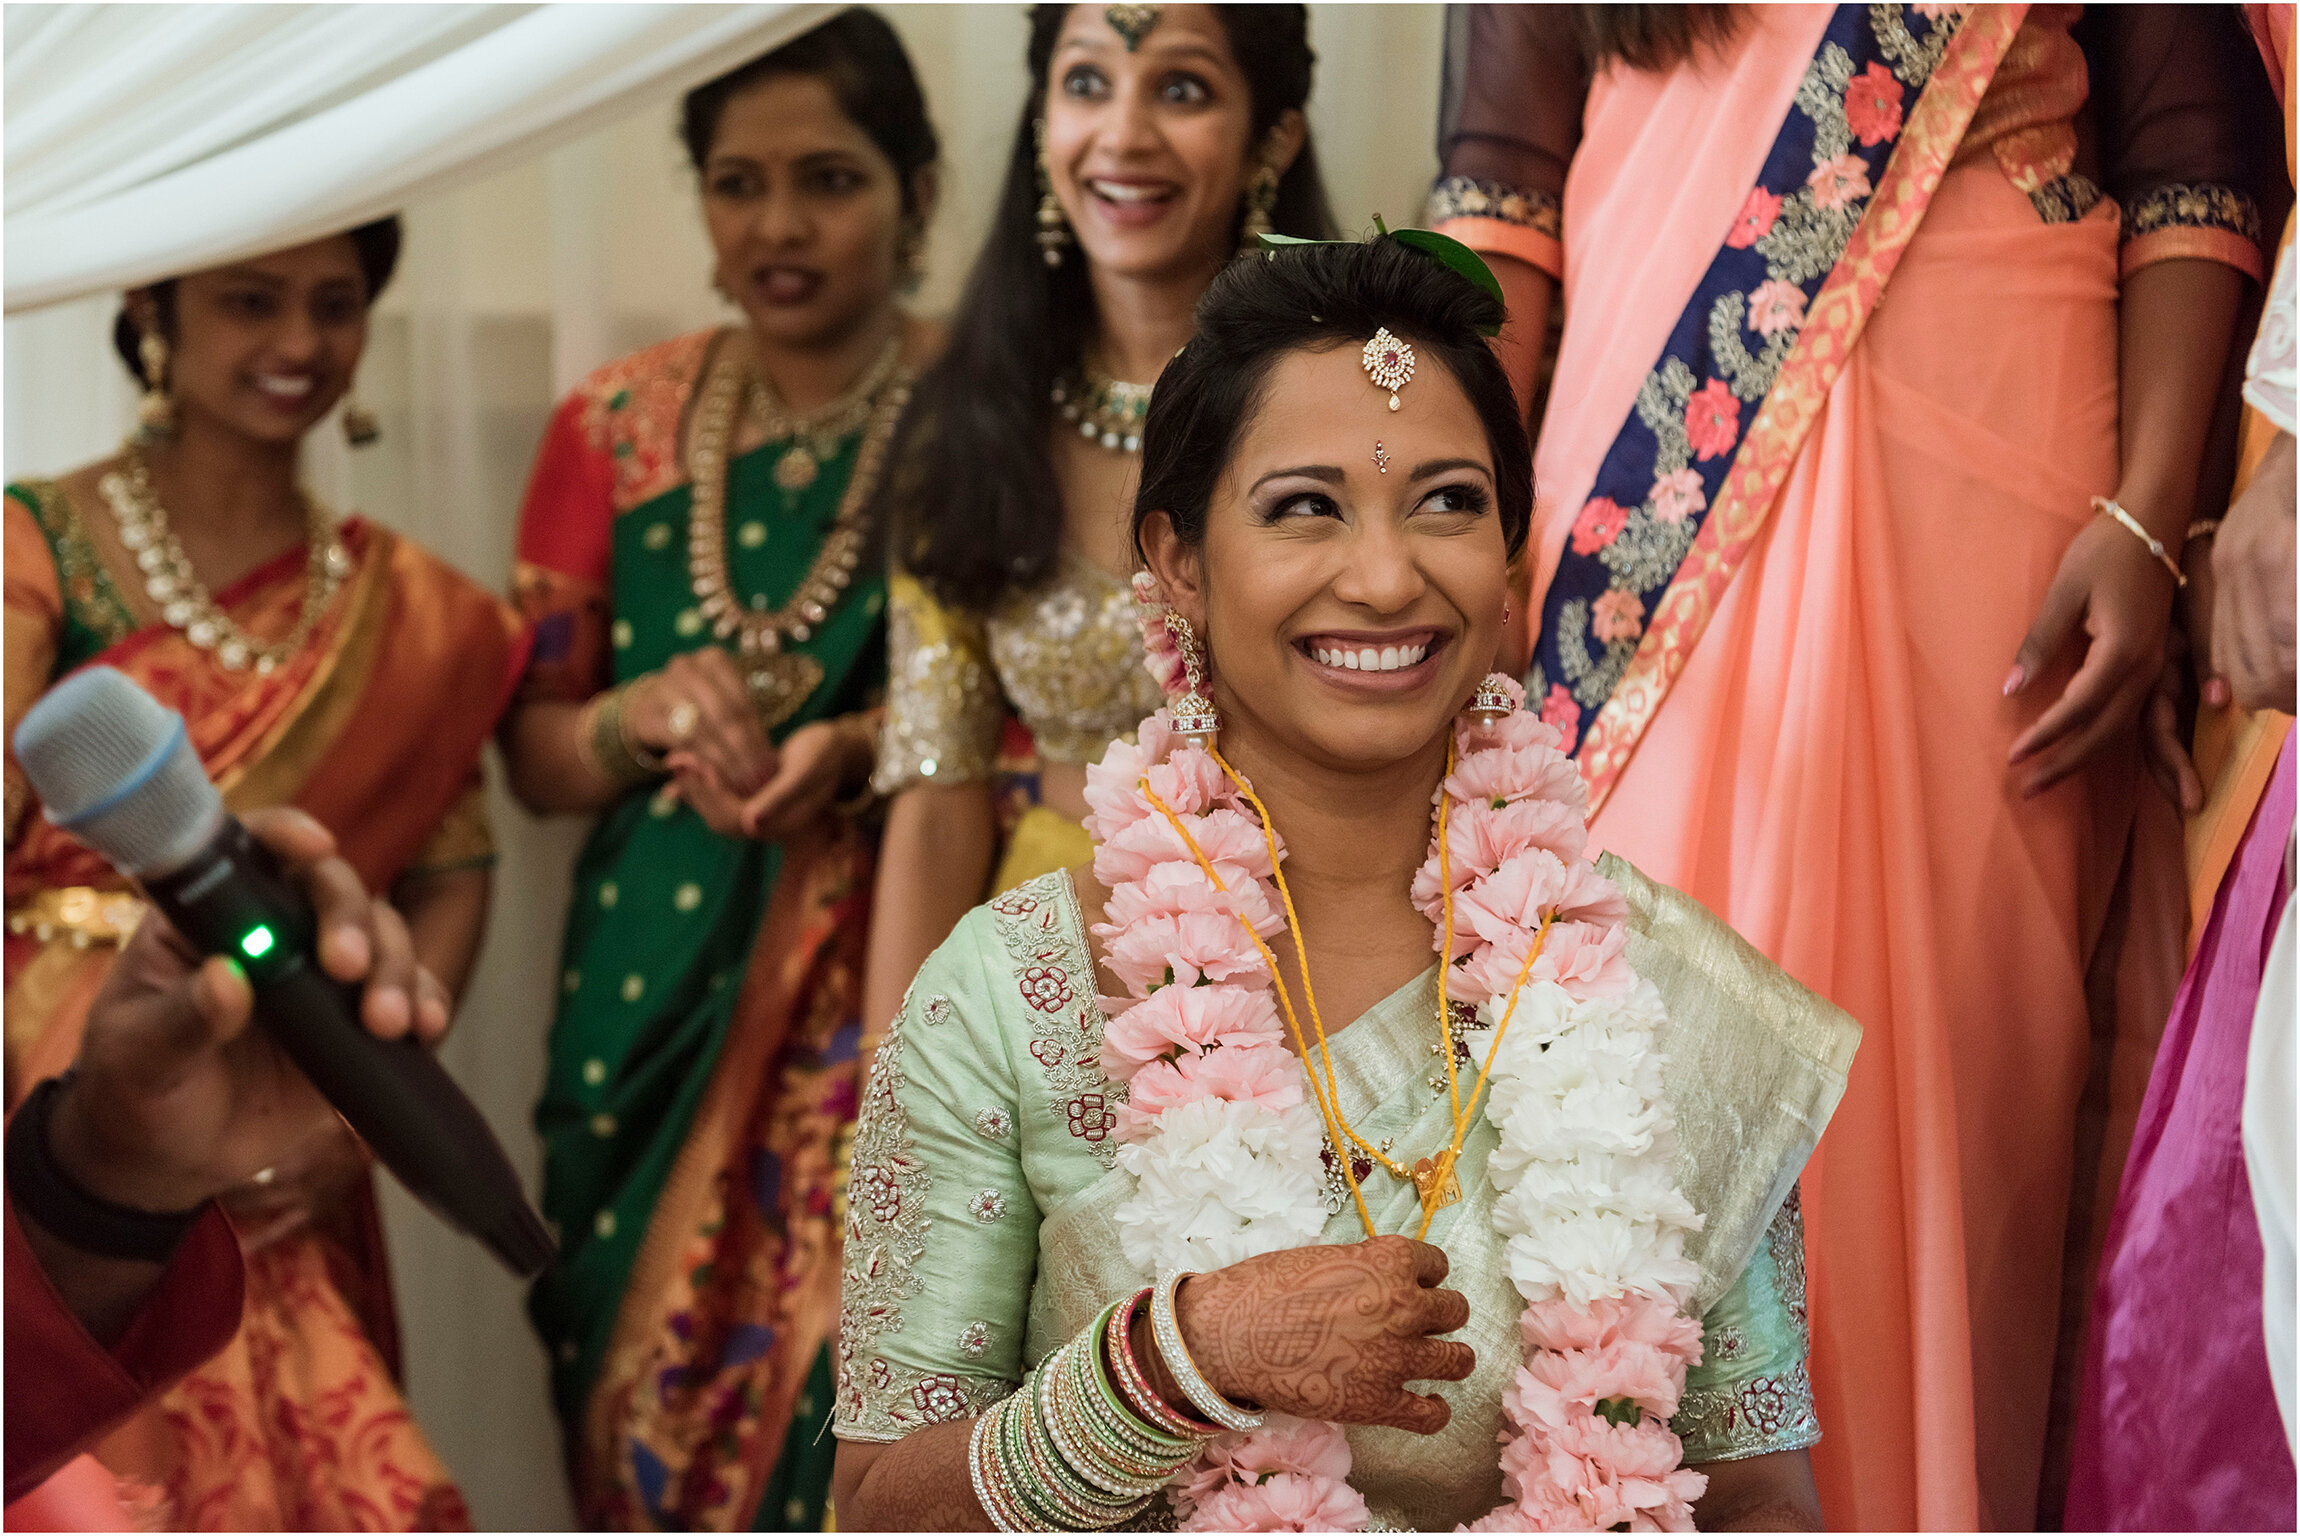 ©FianderFoto_Hindu Wedding_Bermuda_053.jpg